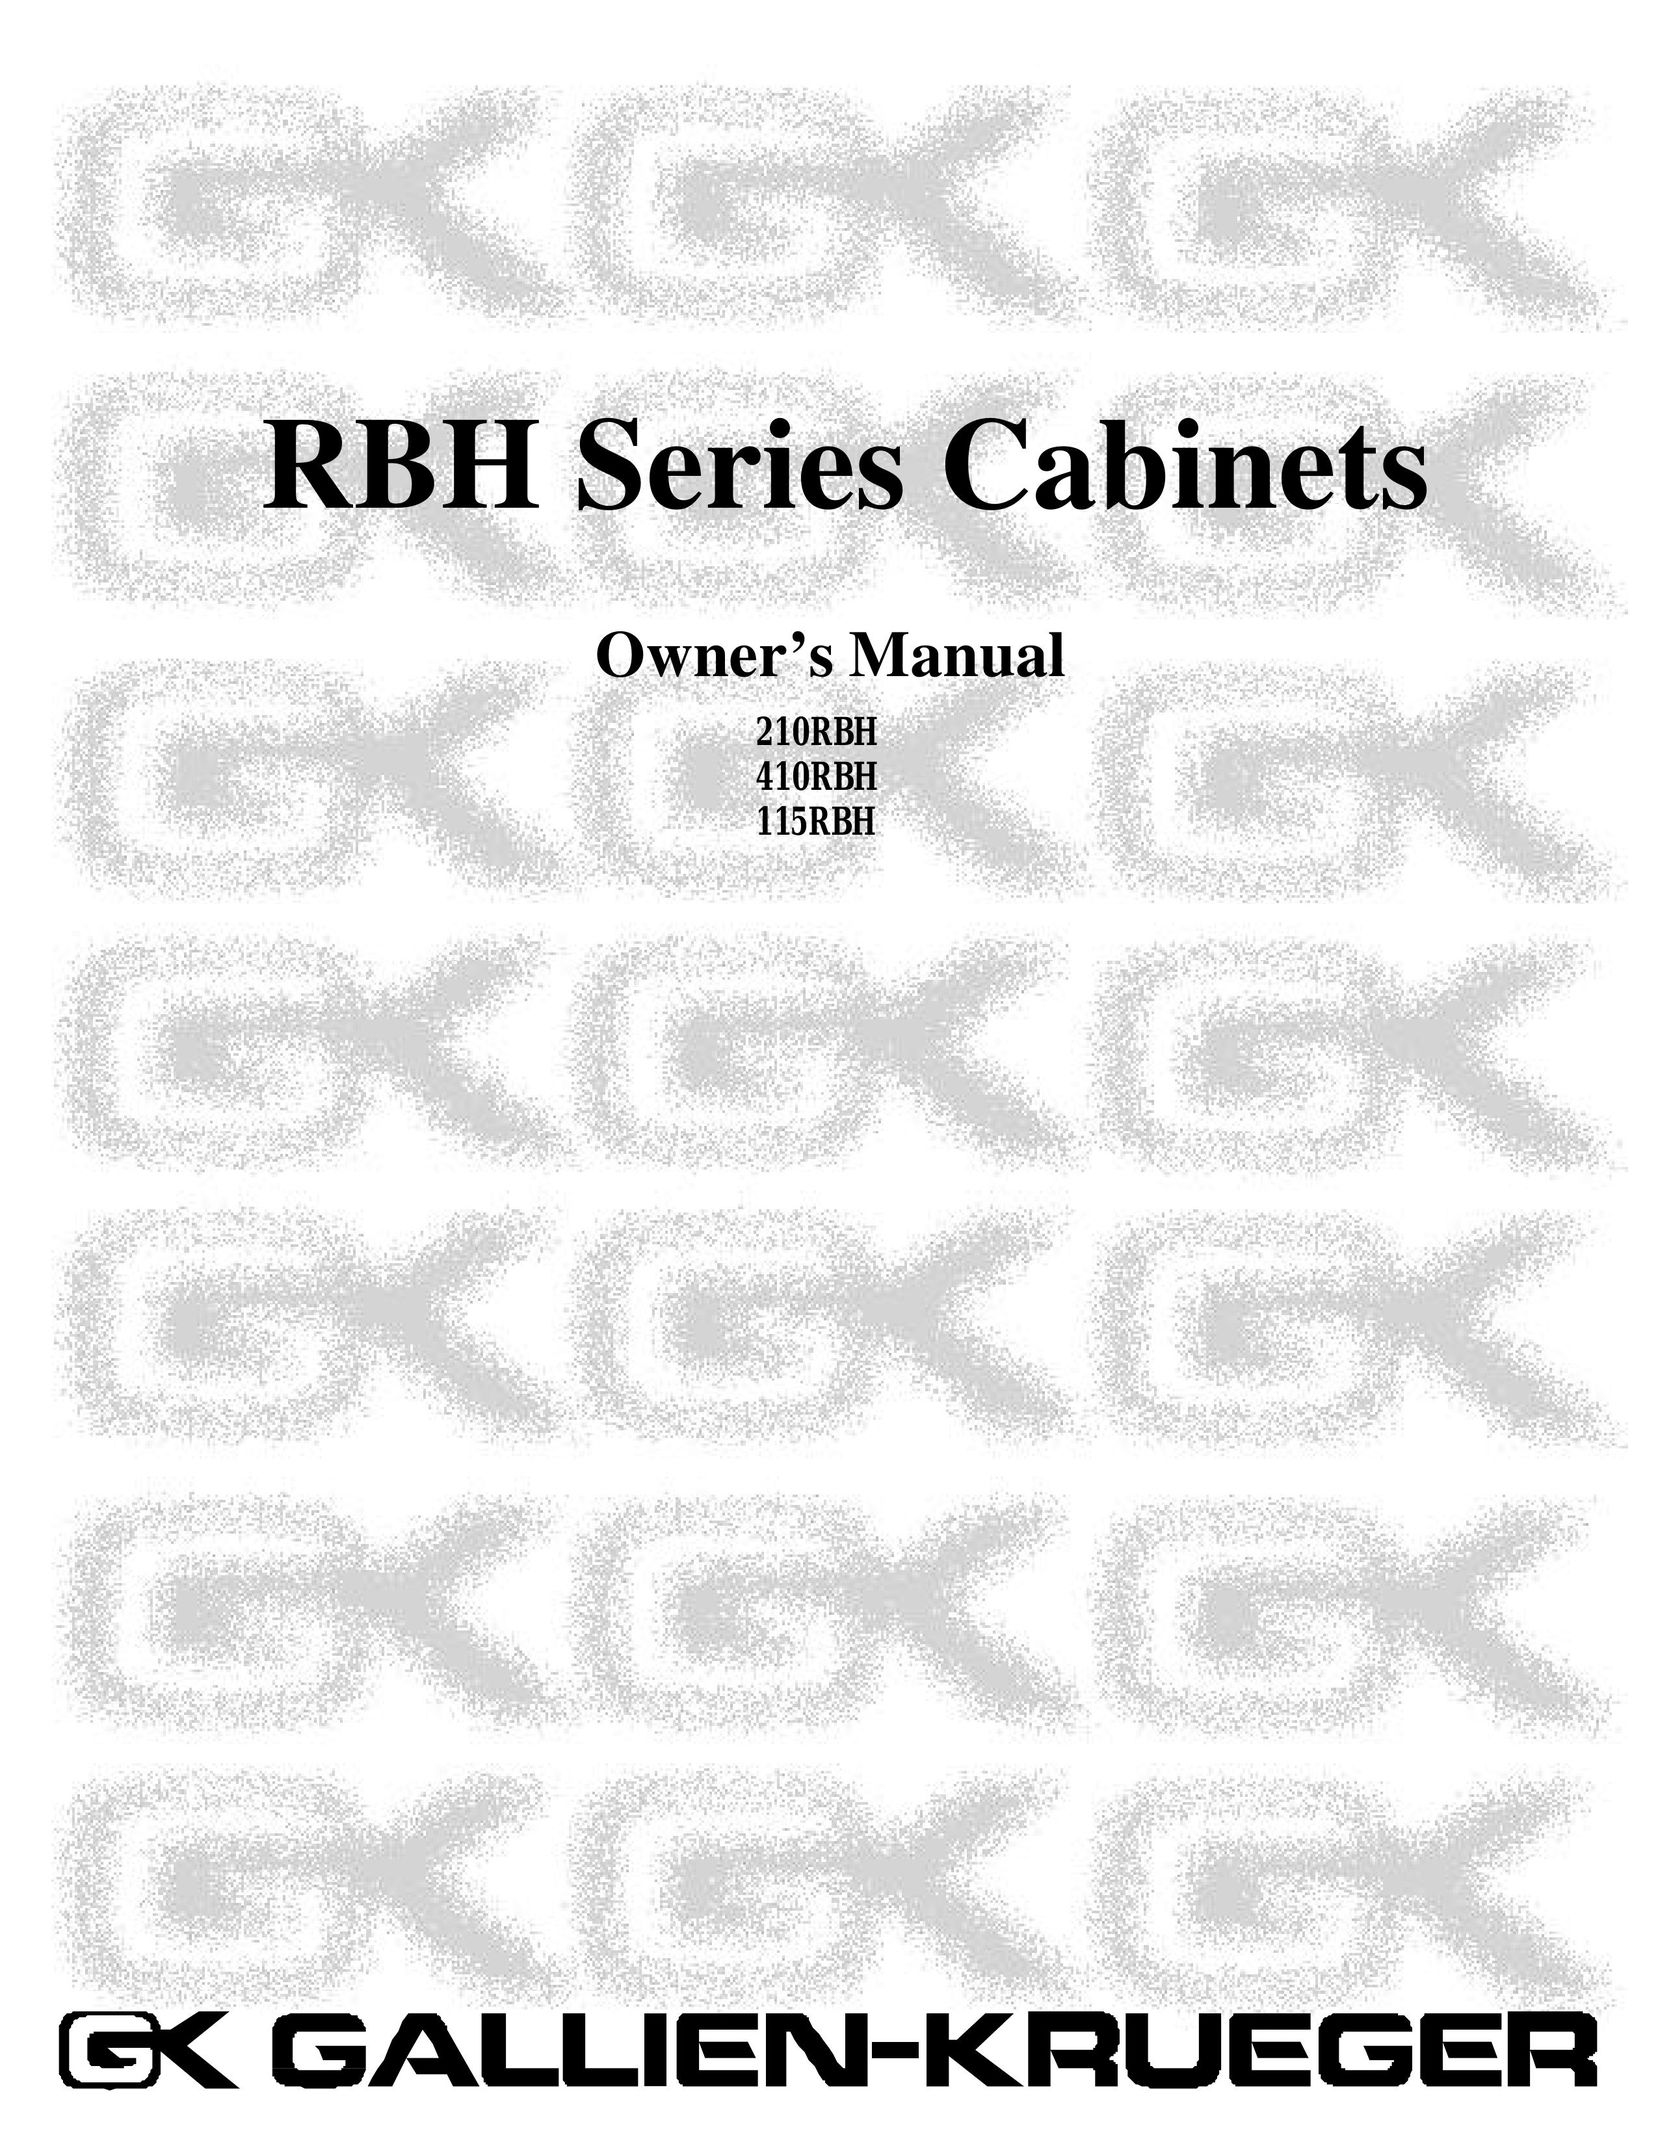 RBH Sound 410RBH Speaker User Manual